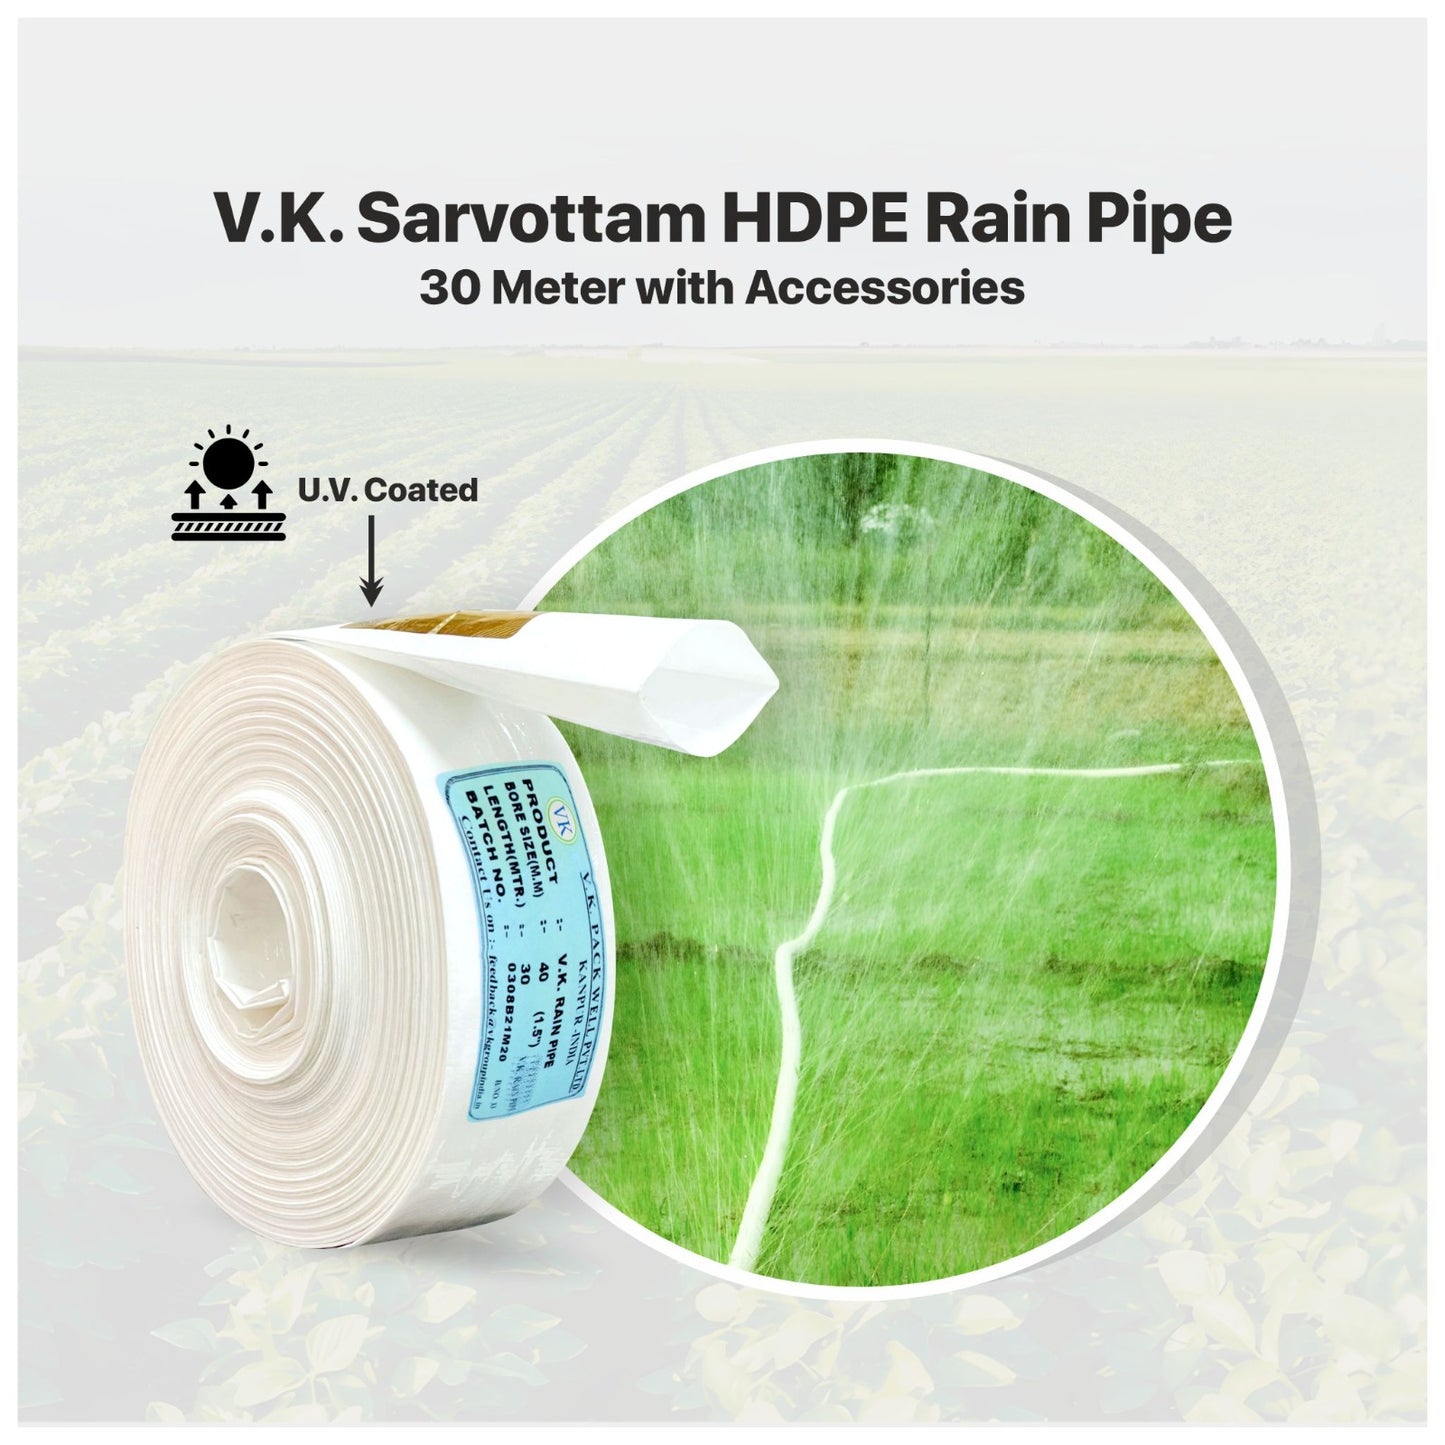 V.K. Sarvottam HDPE Rain Pipe - 30 Meter with Accessories